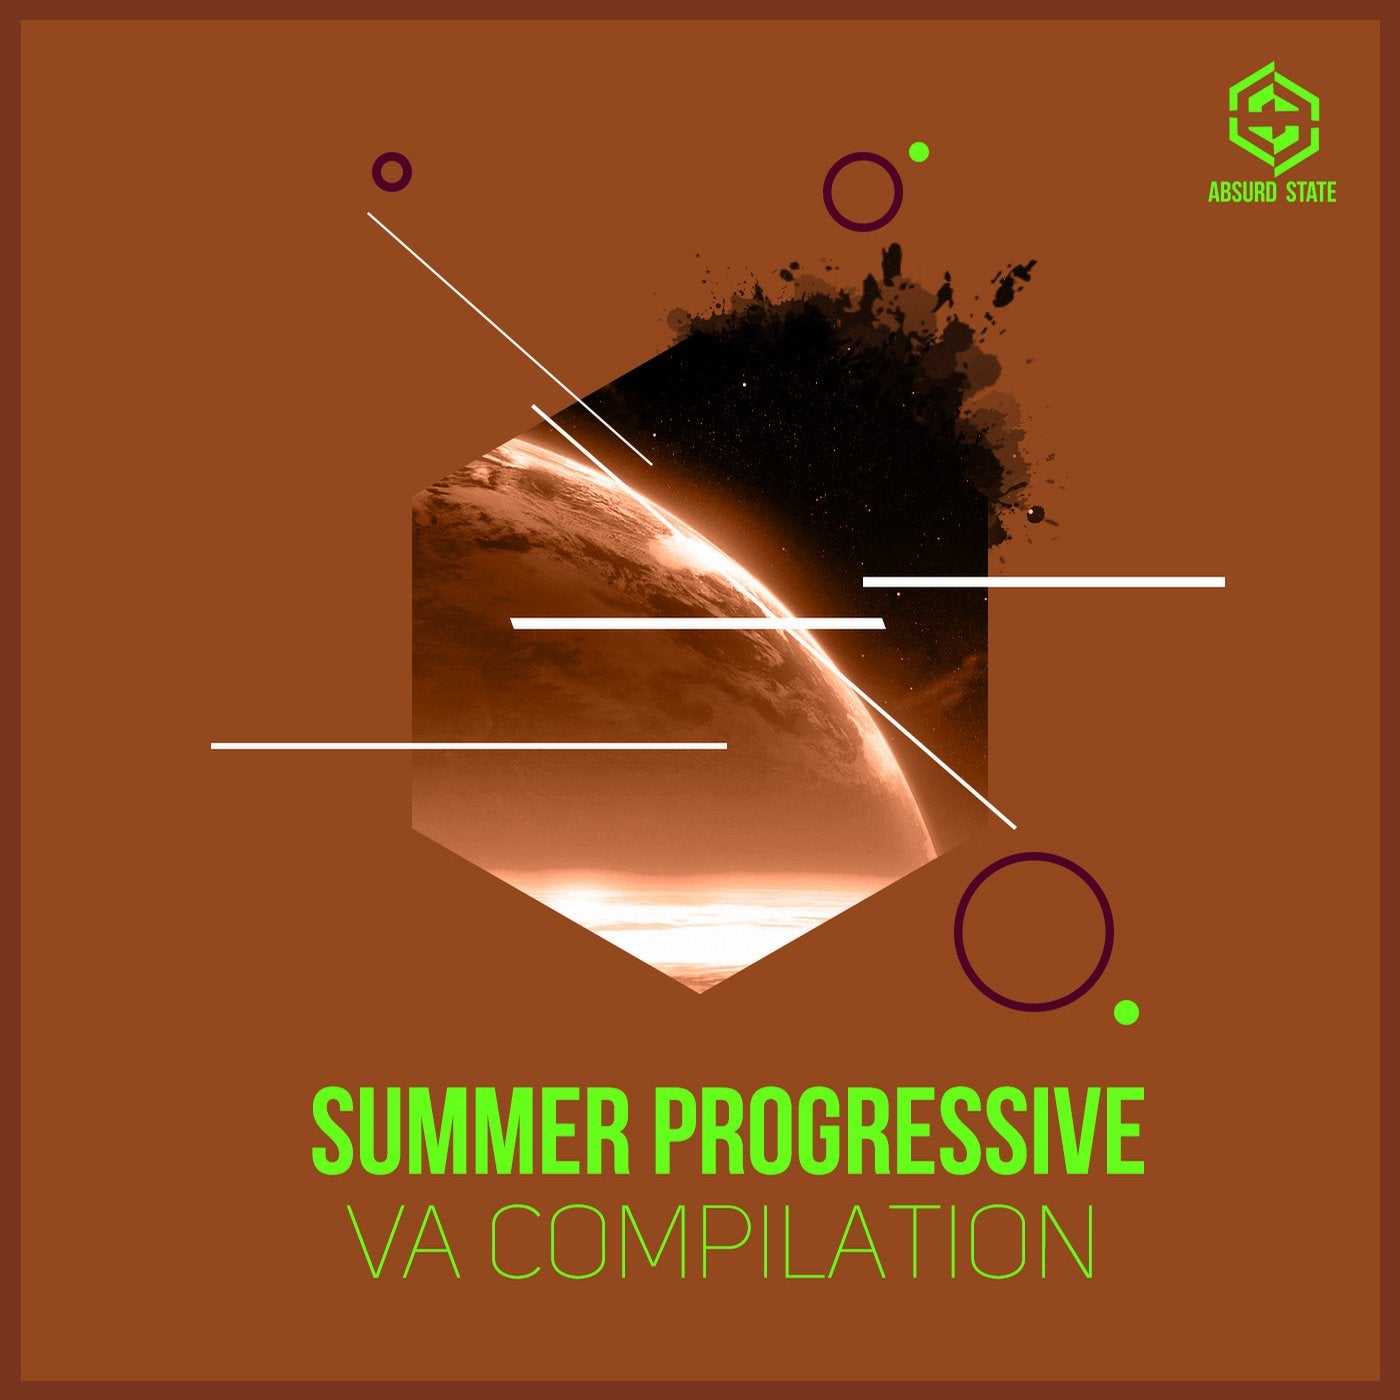 Summer Progressive